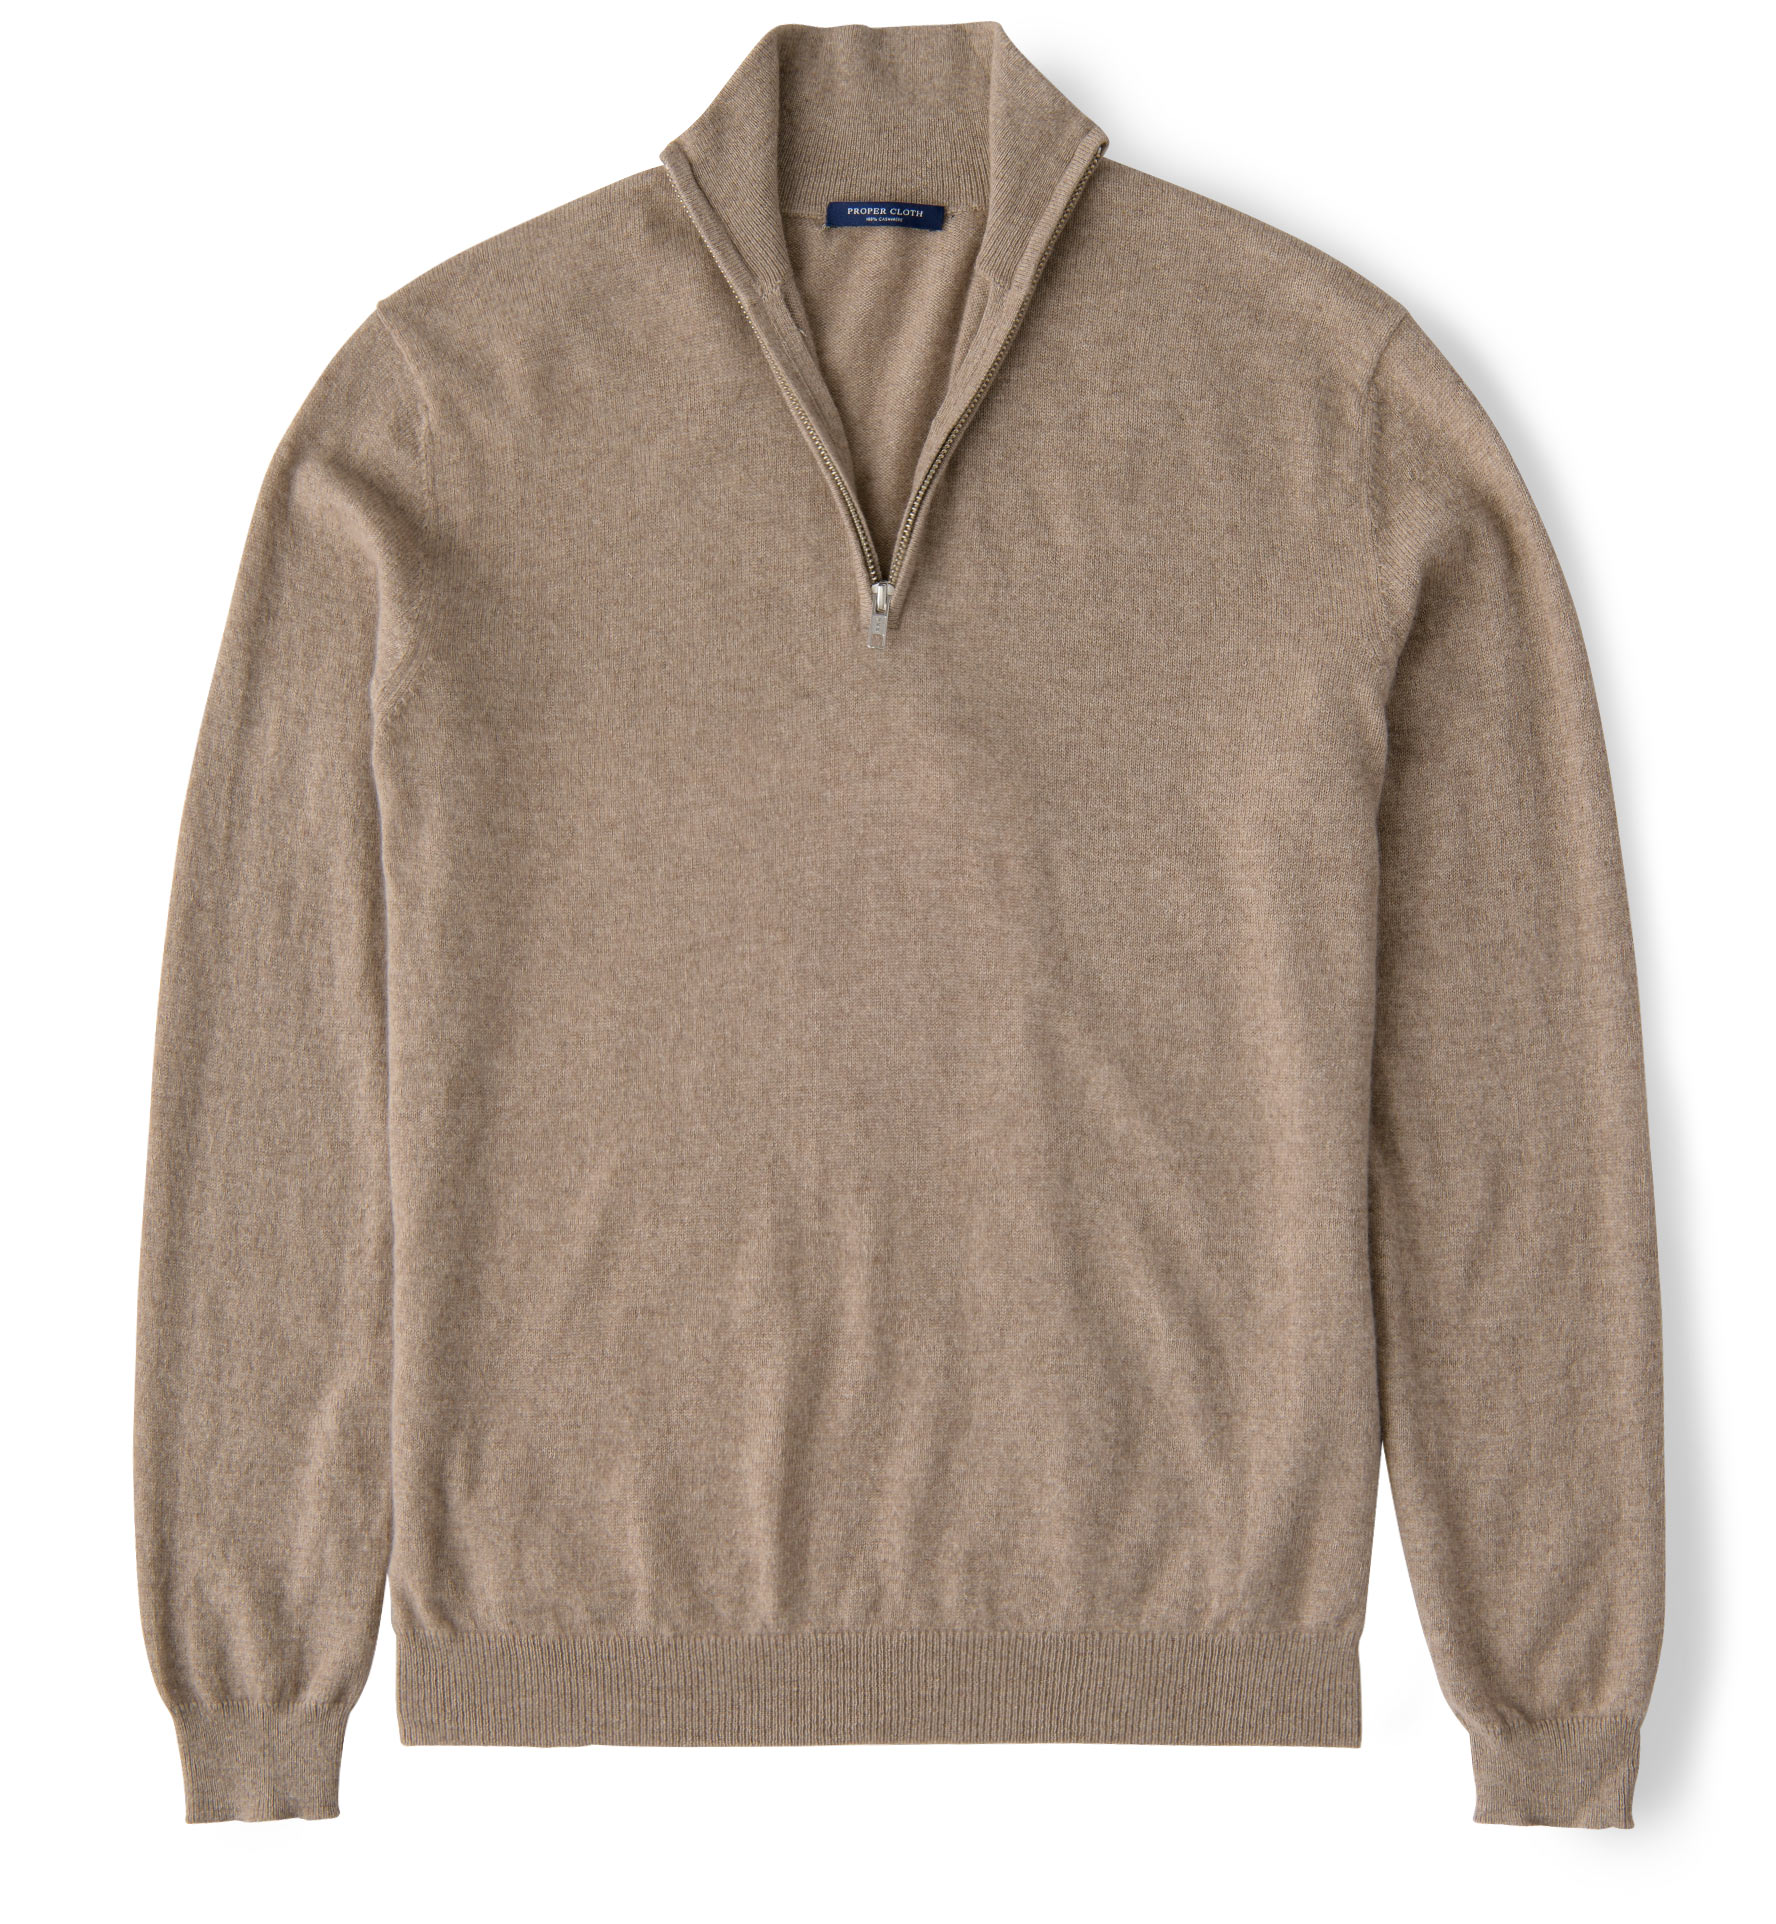 Half Zip Cashemere Sweater in 5 Colors